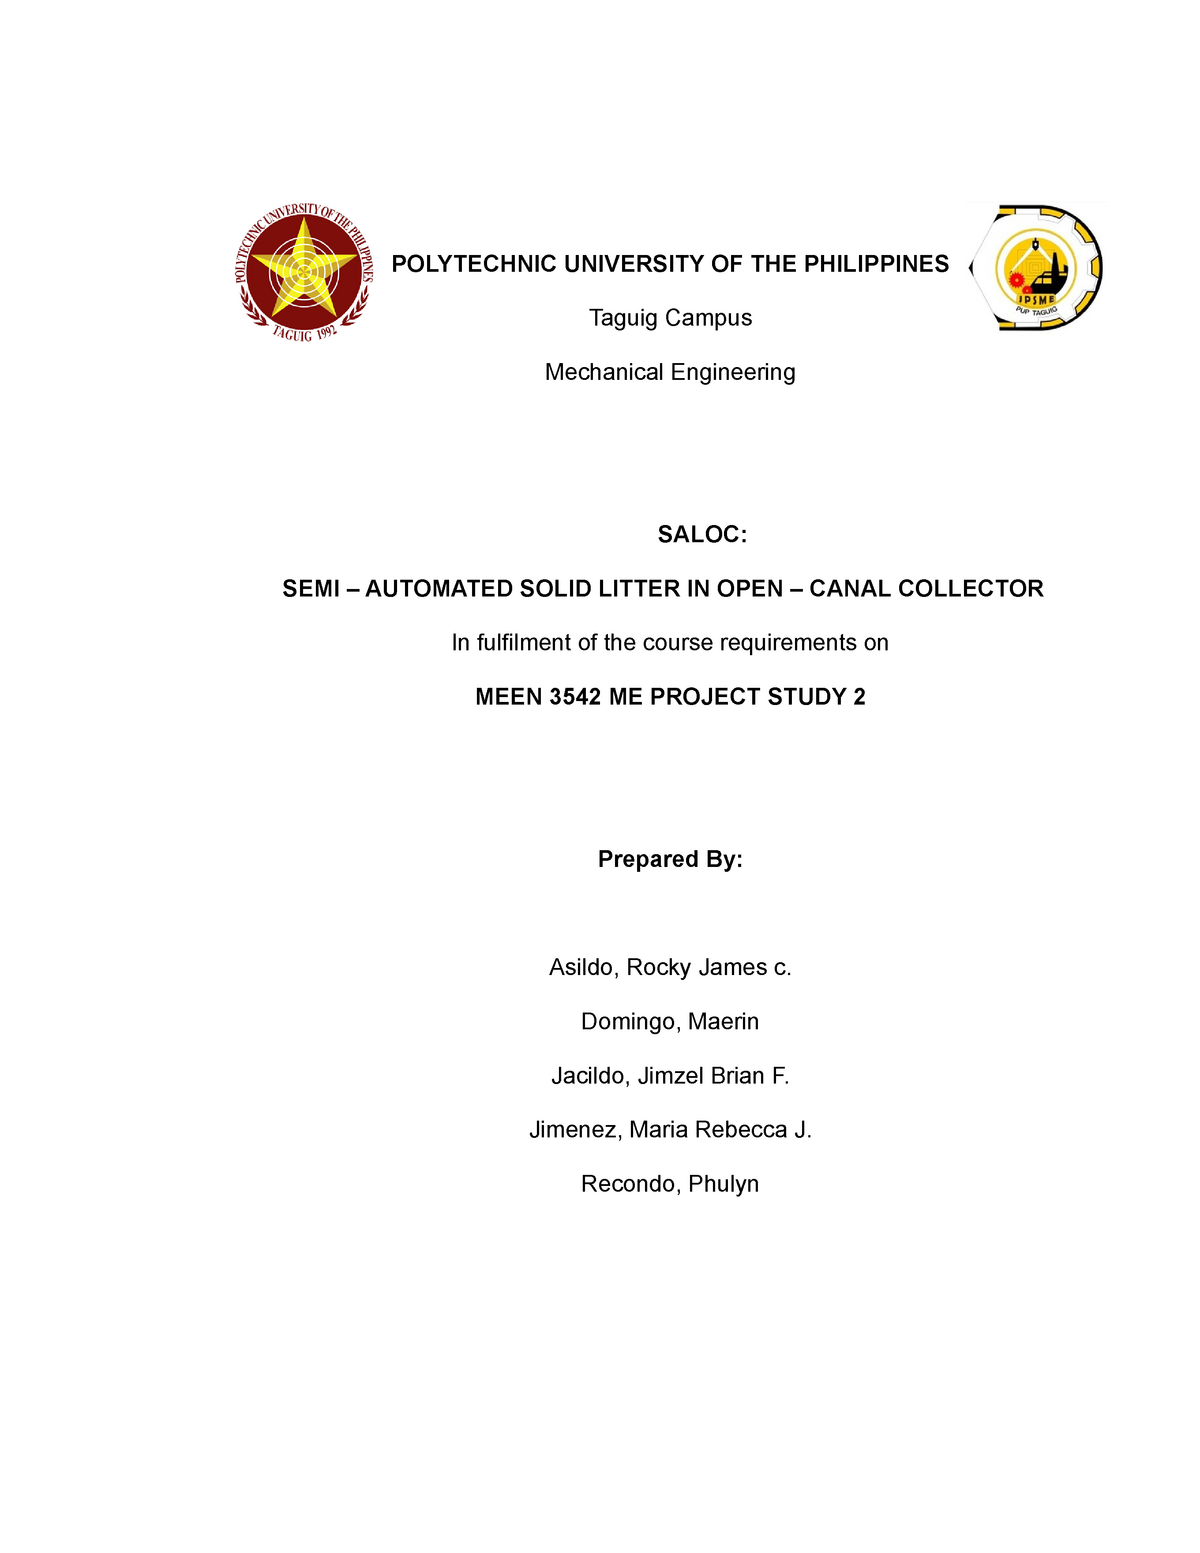 mechanical engineering thesis topics philippines